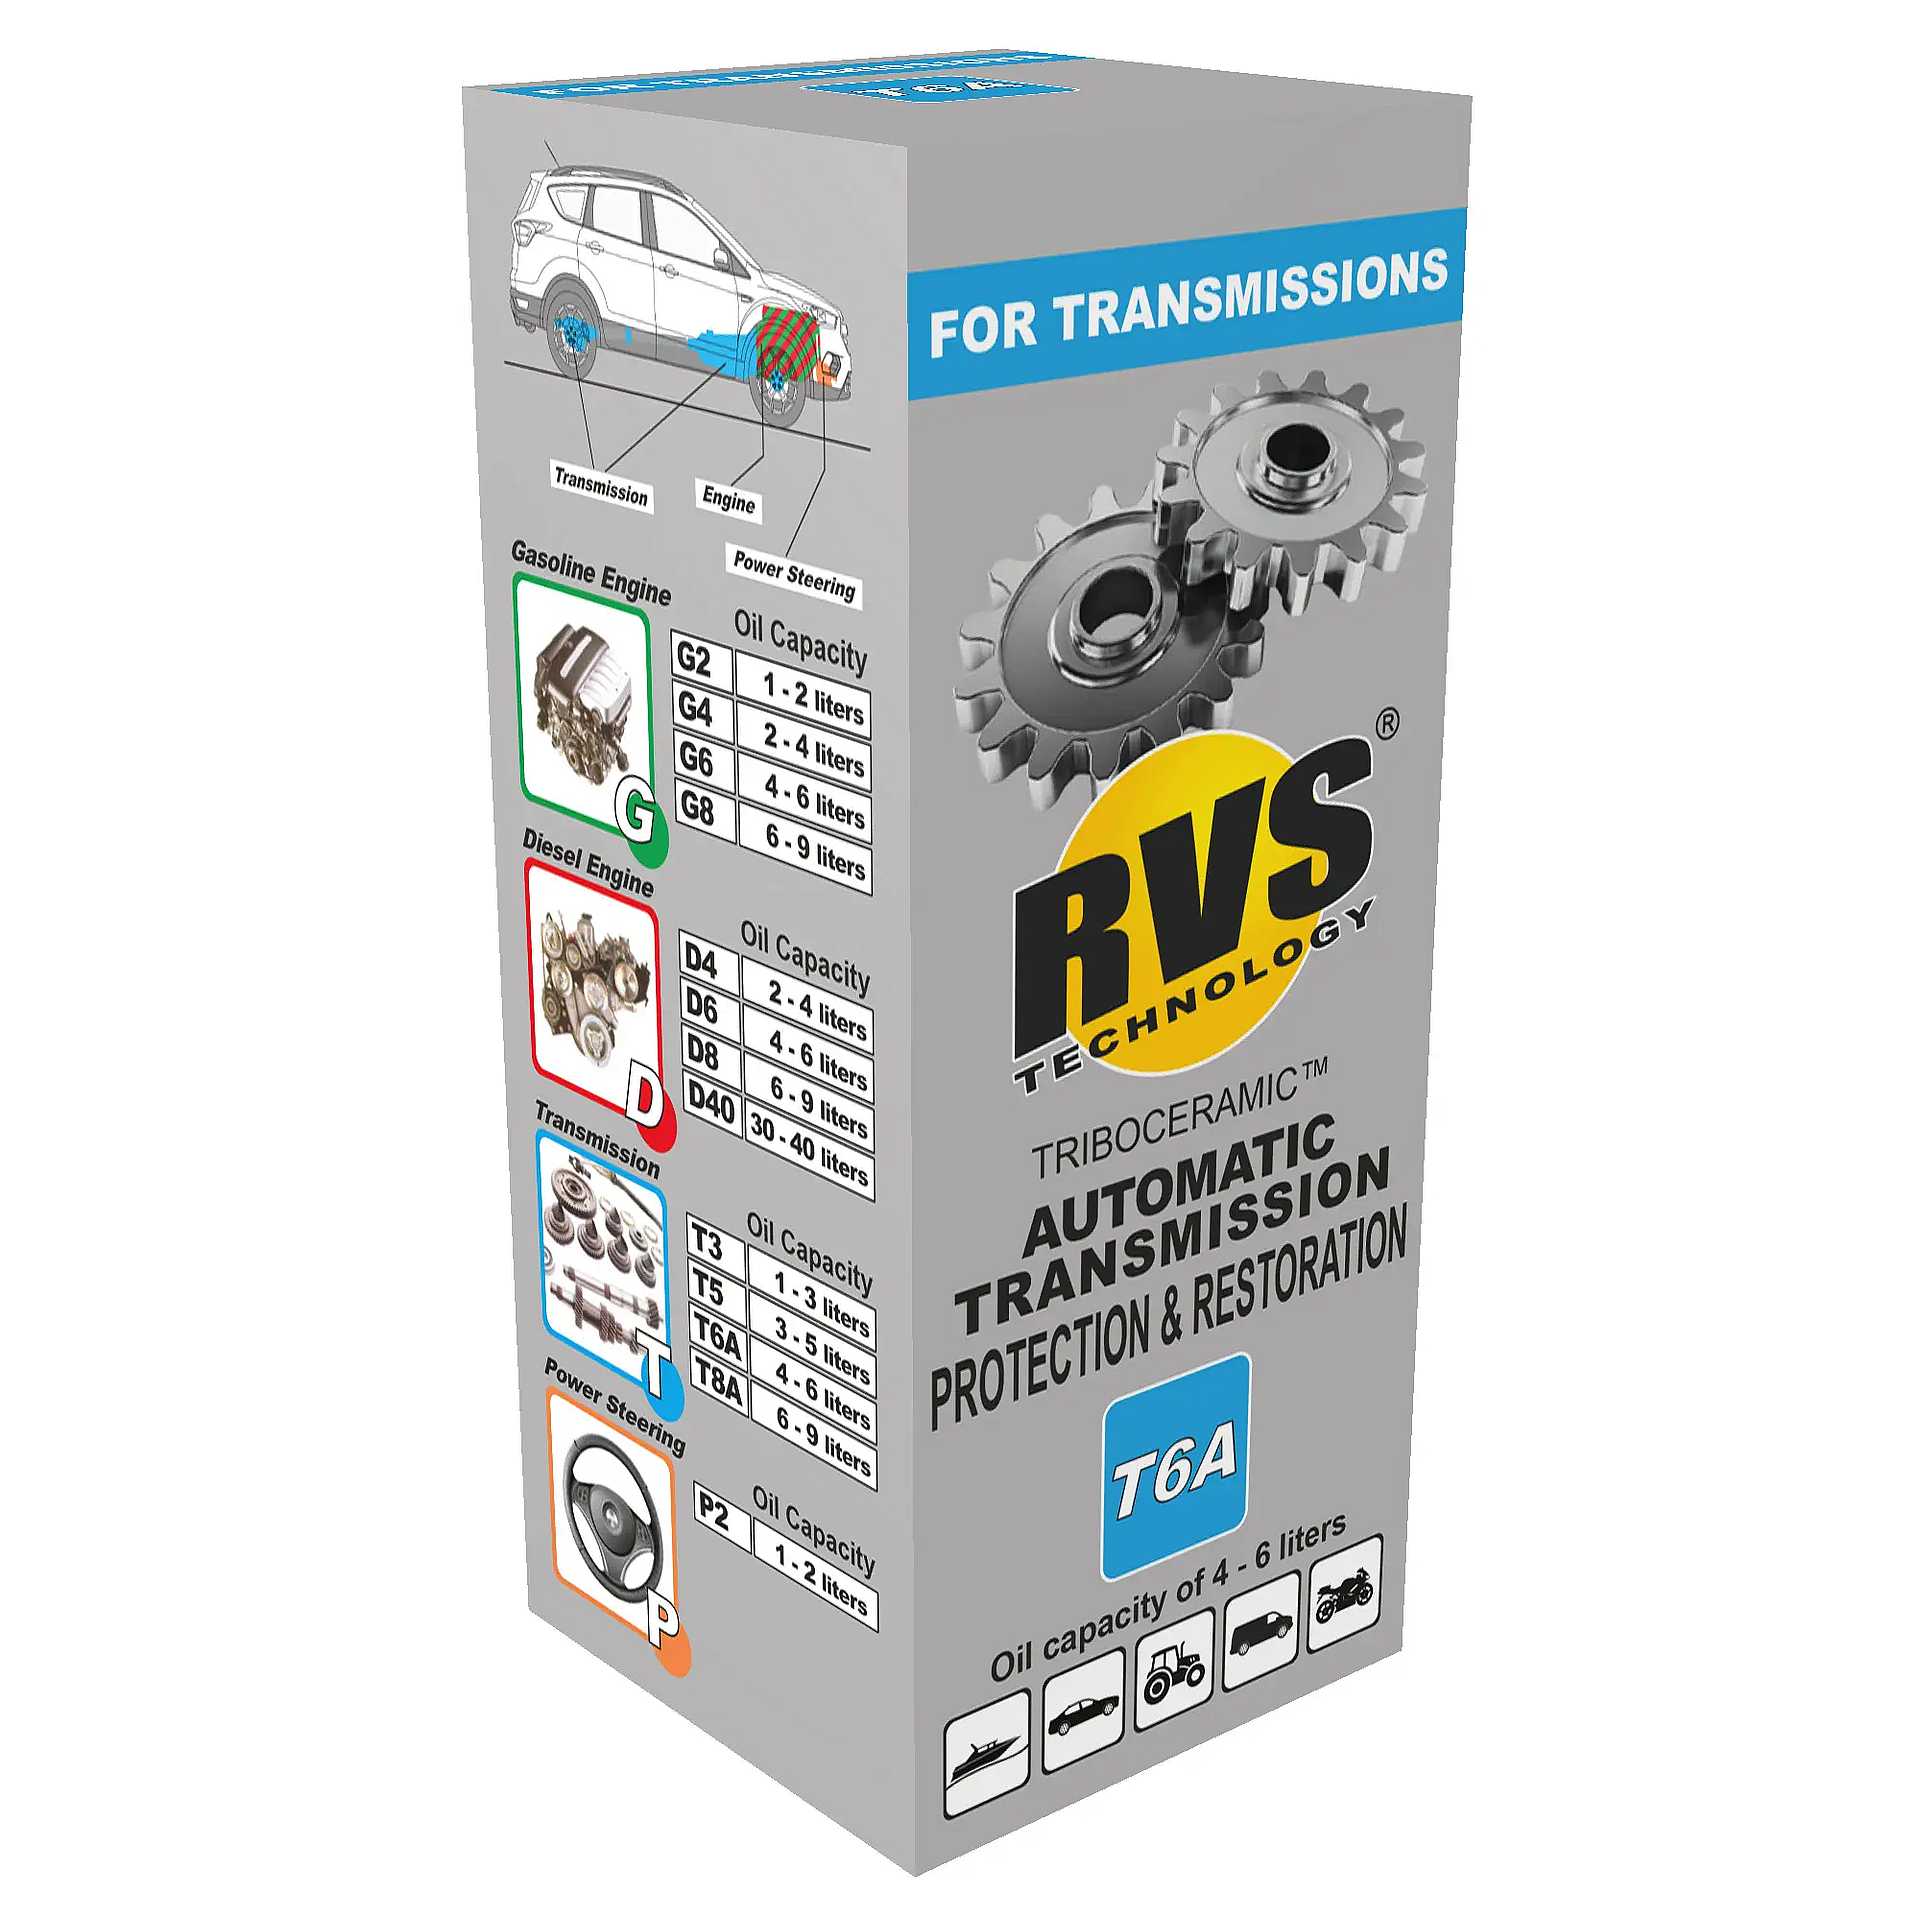 RVS Transmission Protection & Restoration T6A